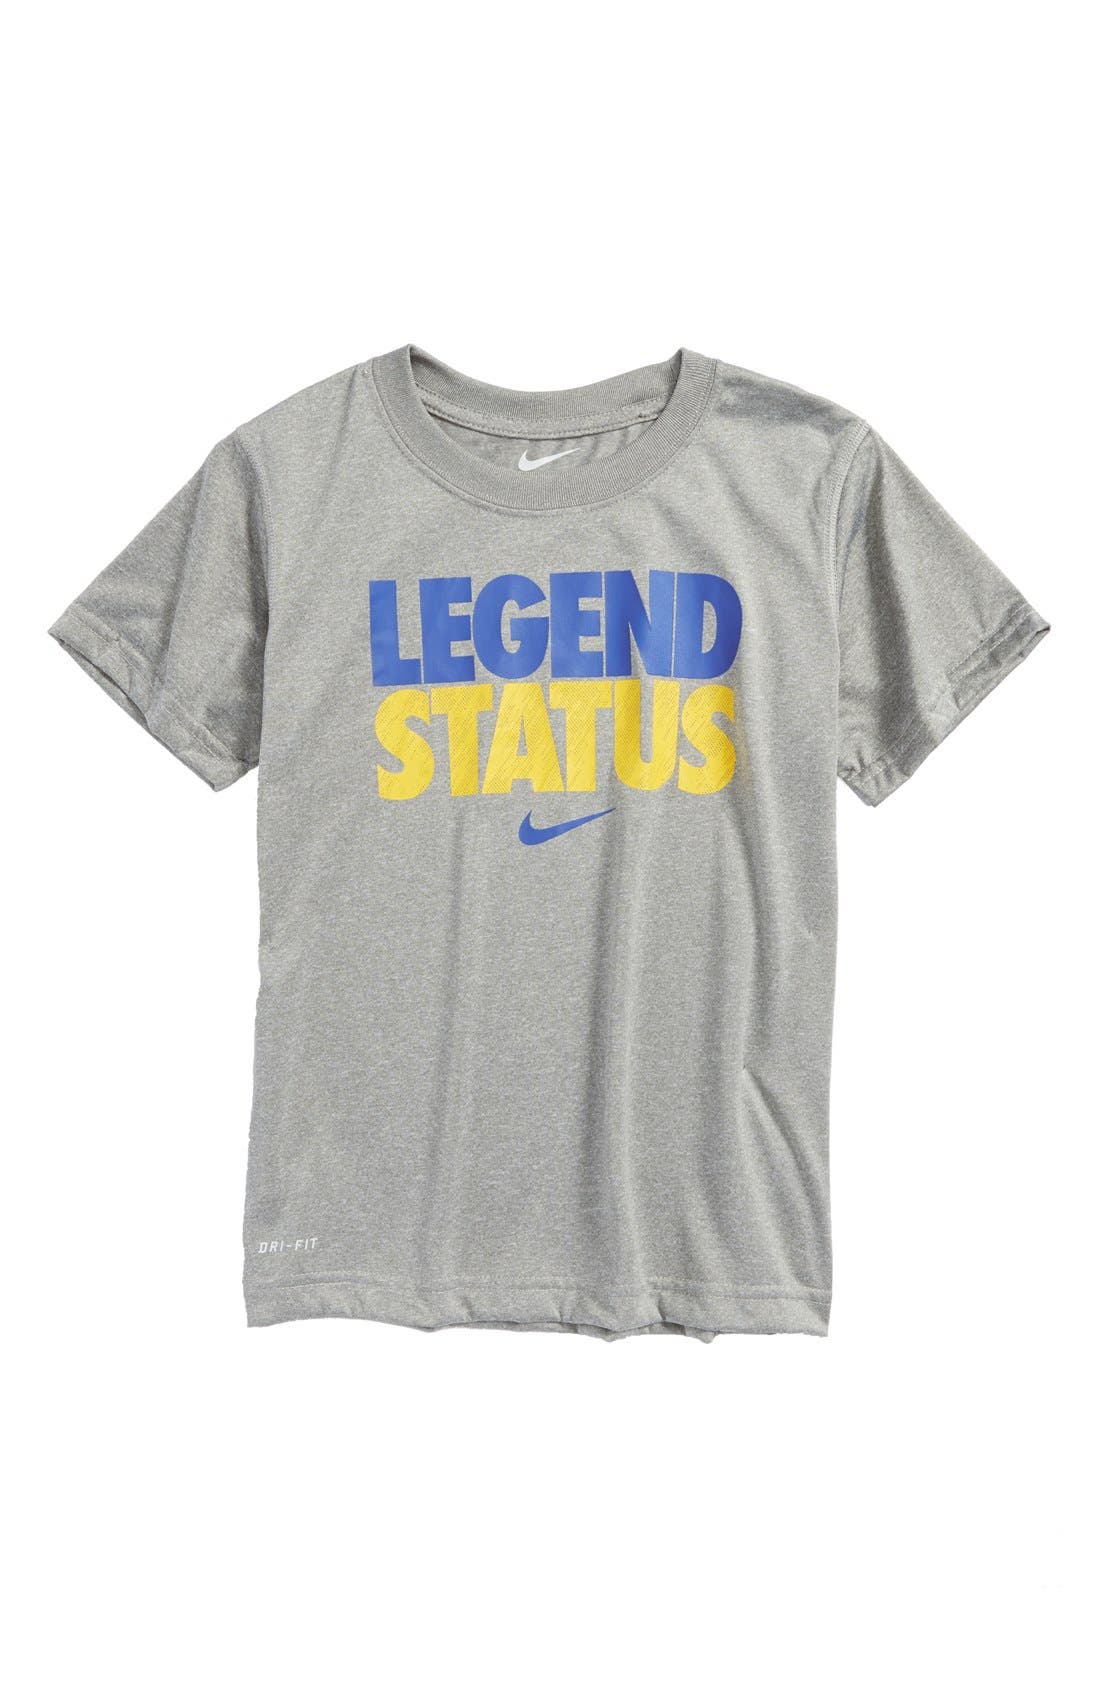 nike legend status t shirt